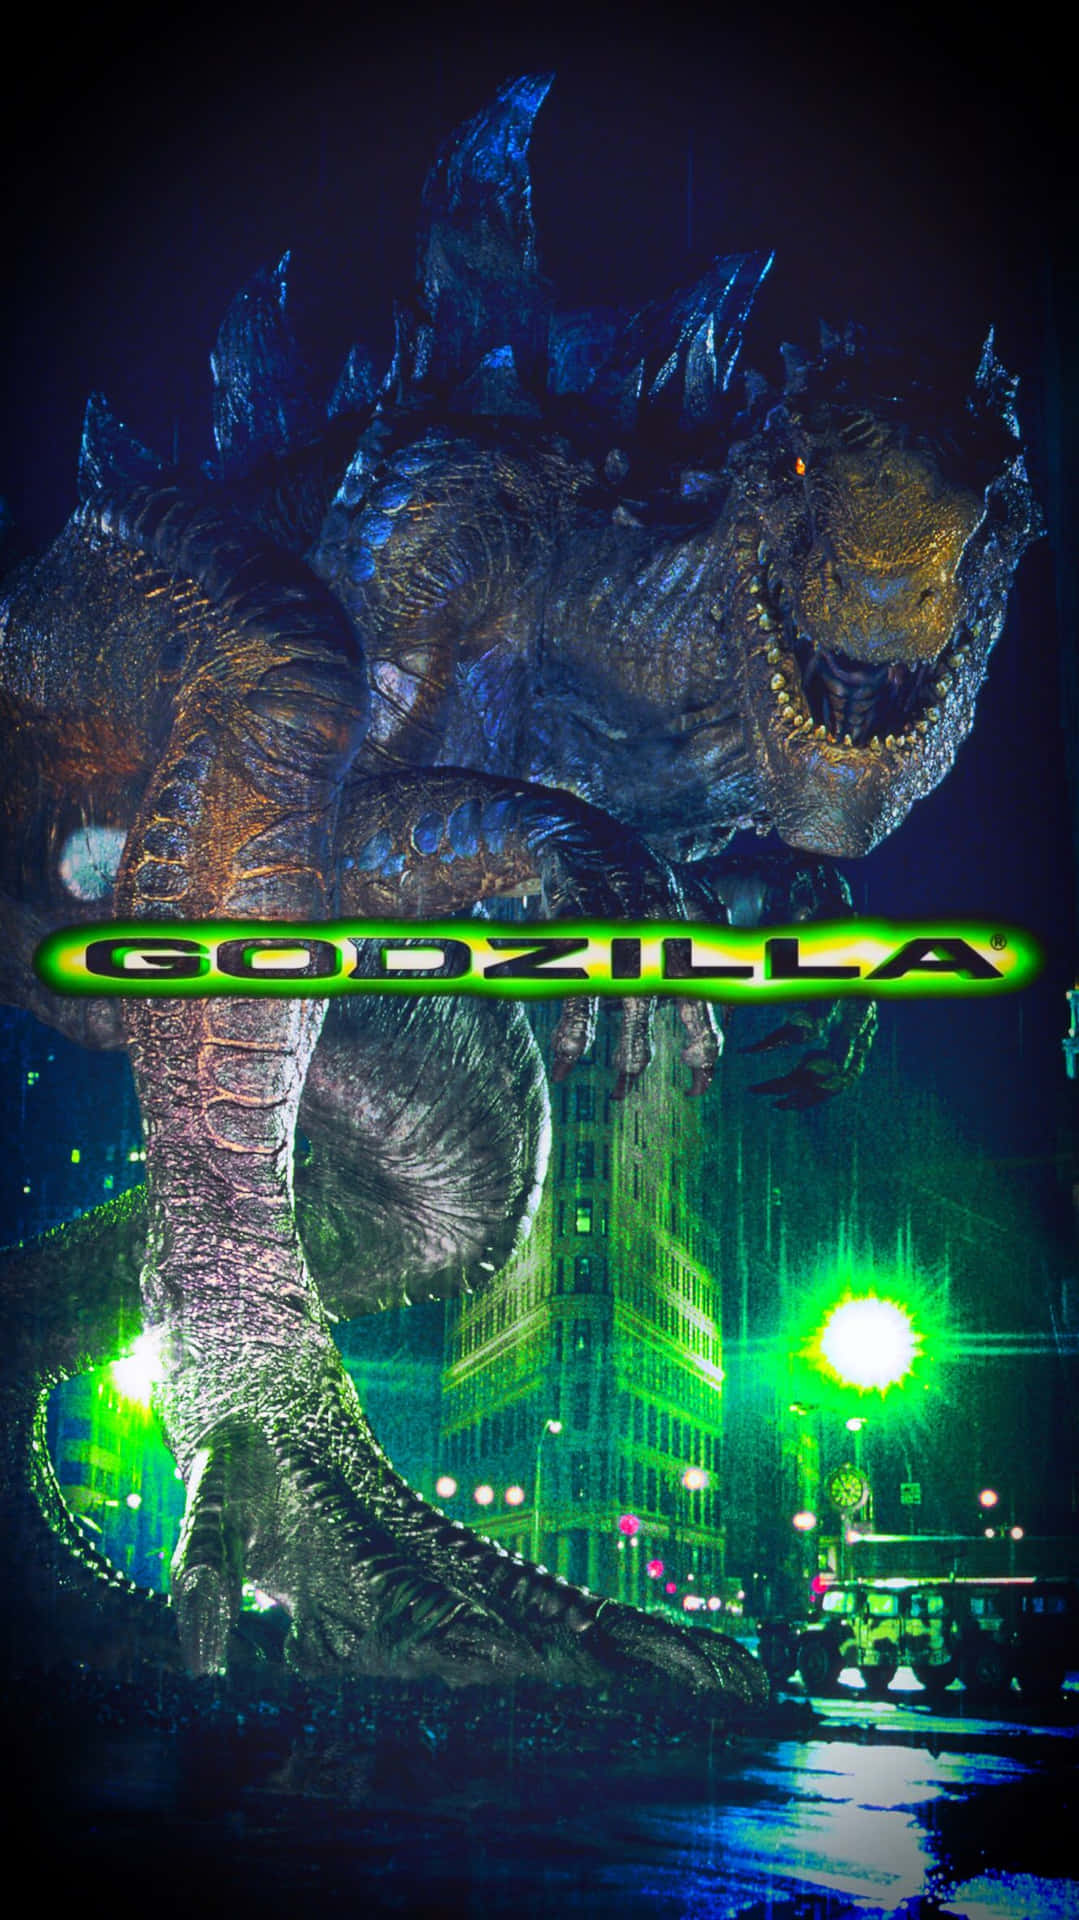 Godzilla 1998 Roaring in the City Wallpaper